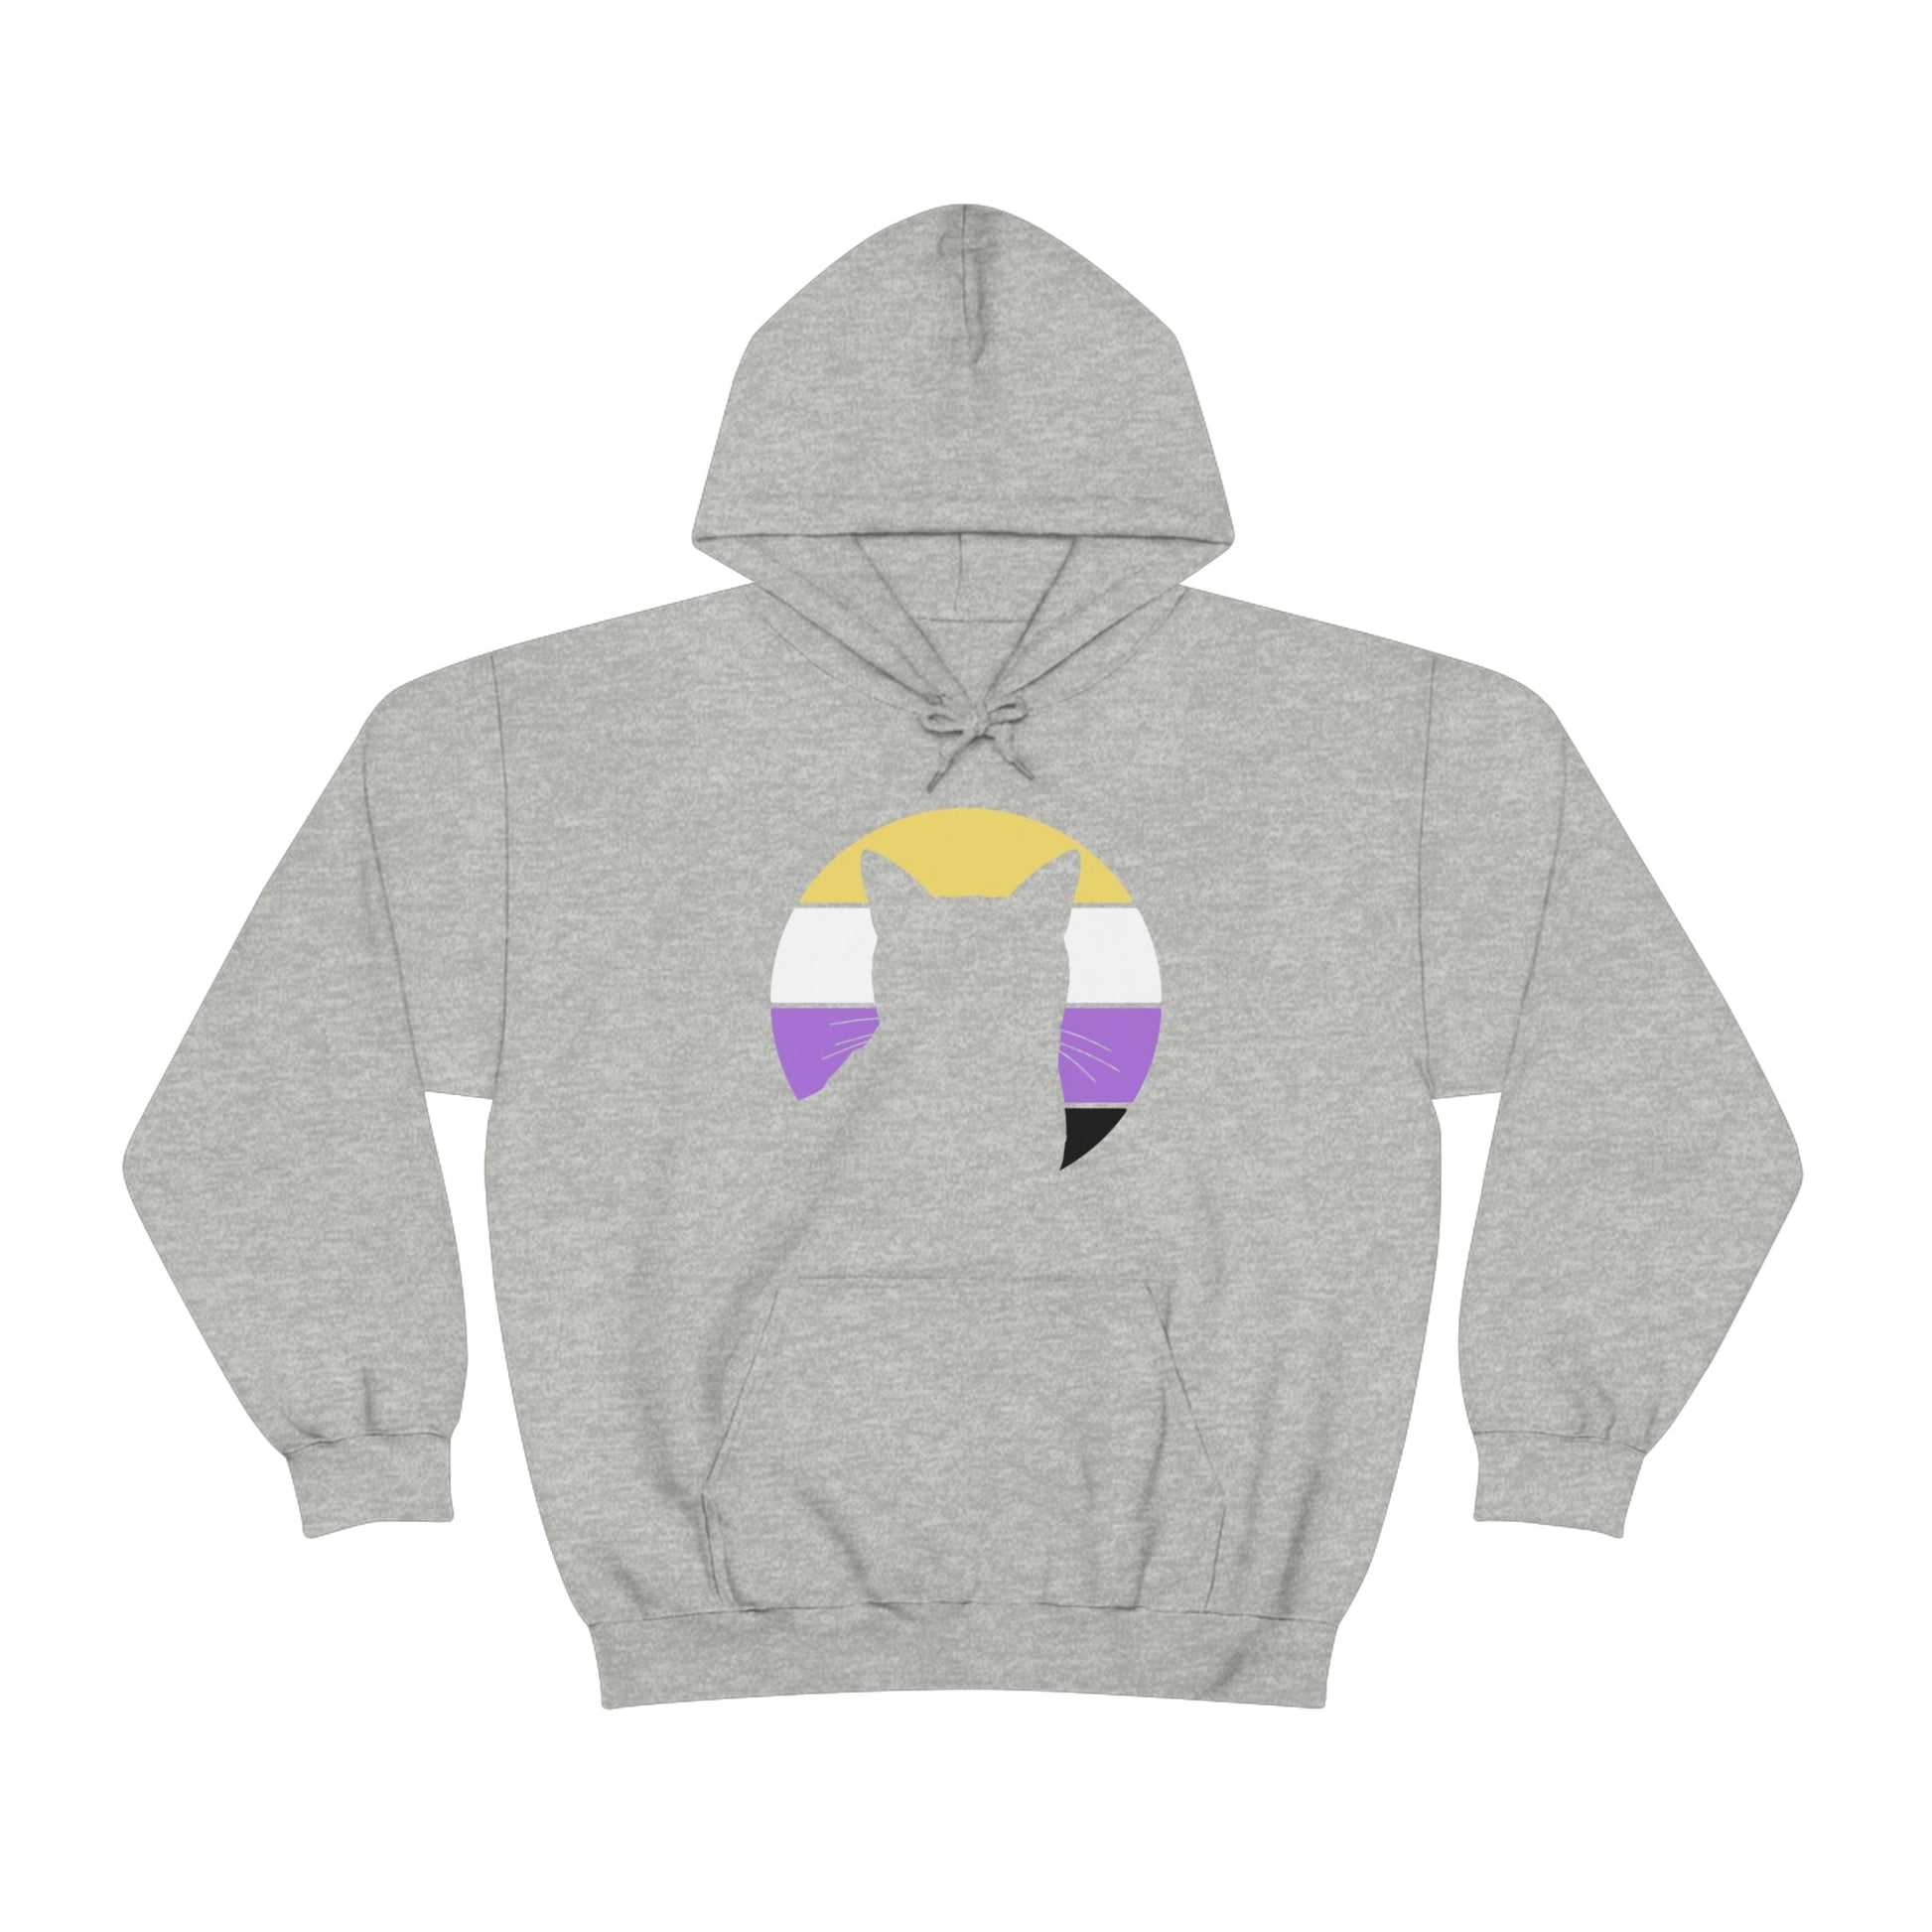 Nonbinary Pride | Cat Silhouette | Hooded Sweatshirt - Detezi Designs-19309981415268679772